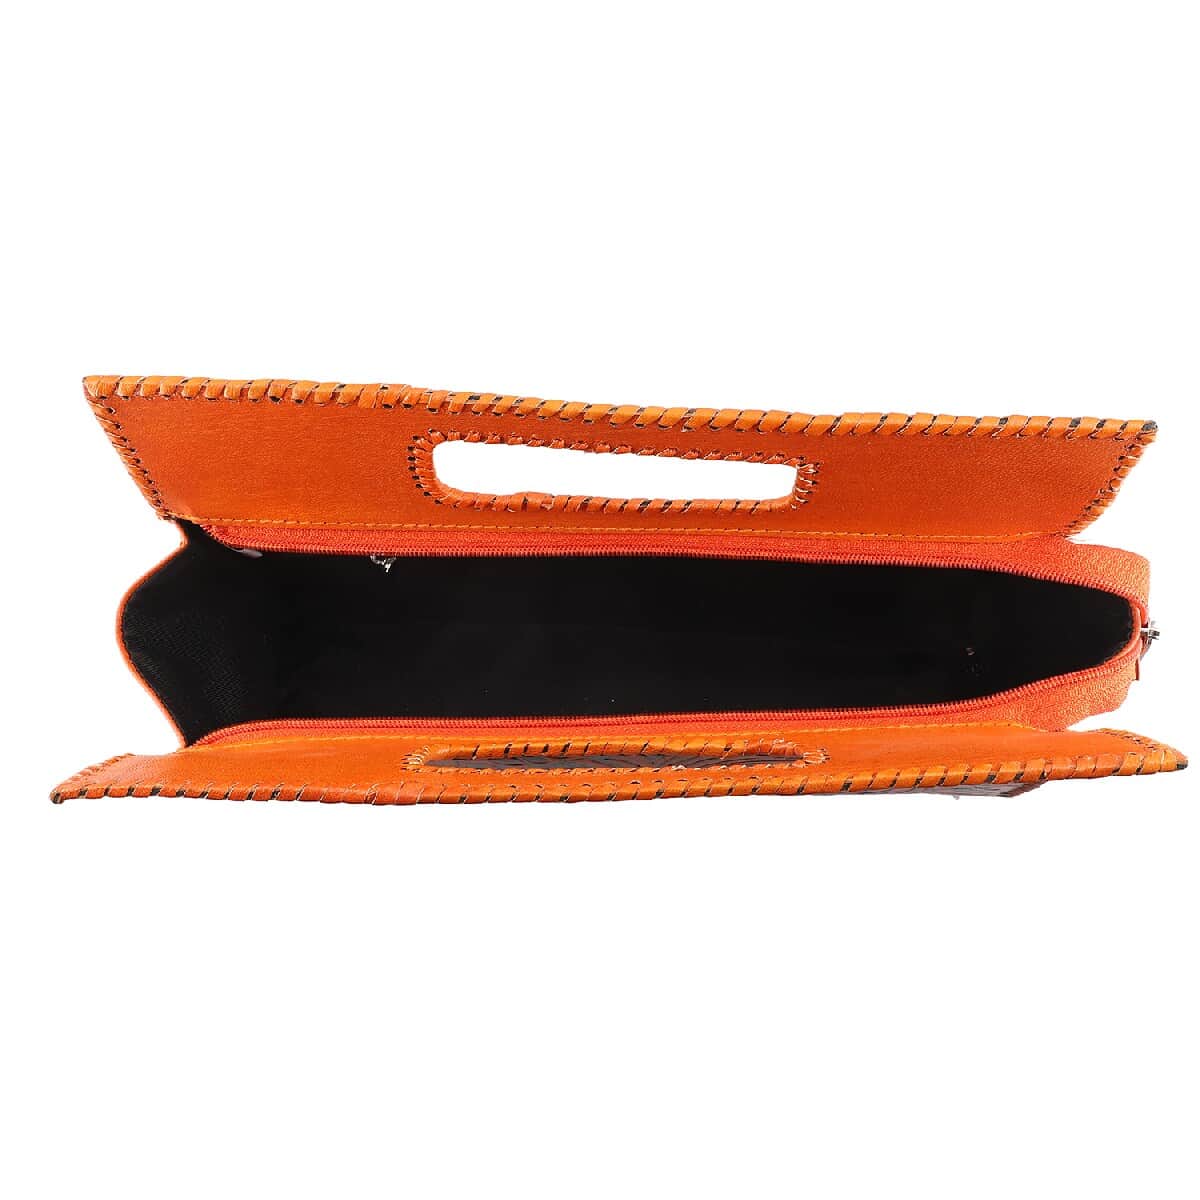 VIVID by SUKRITI - Dark Orange Floral 100% Genuine Leather Clutch Bag image number 4